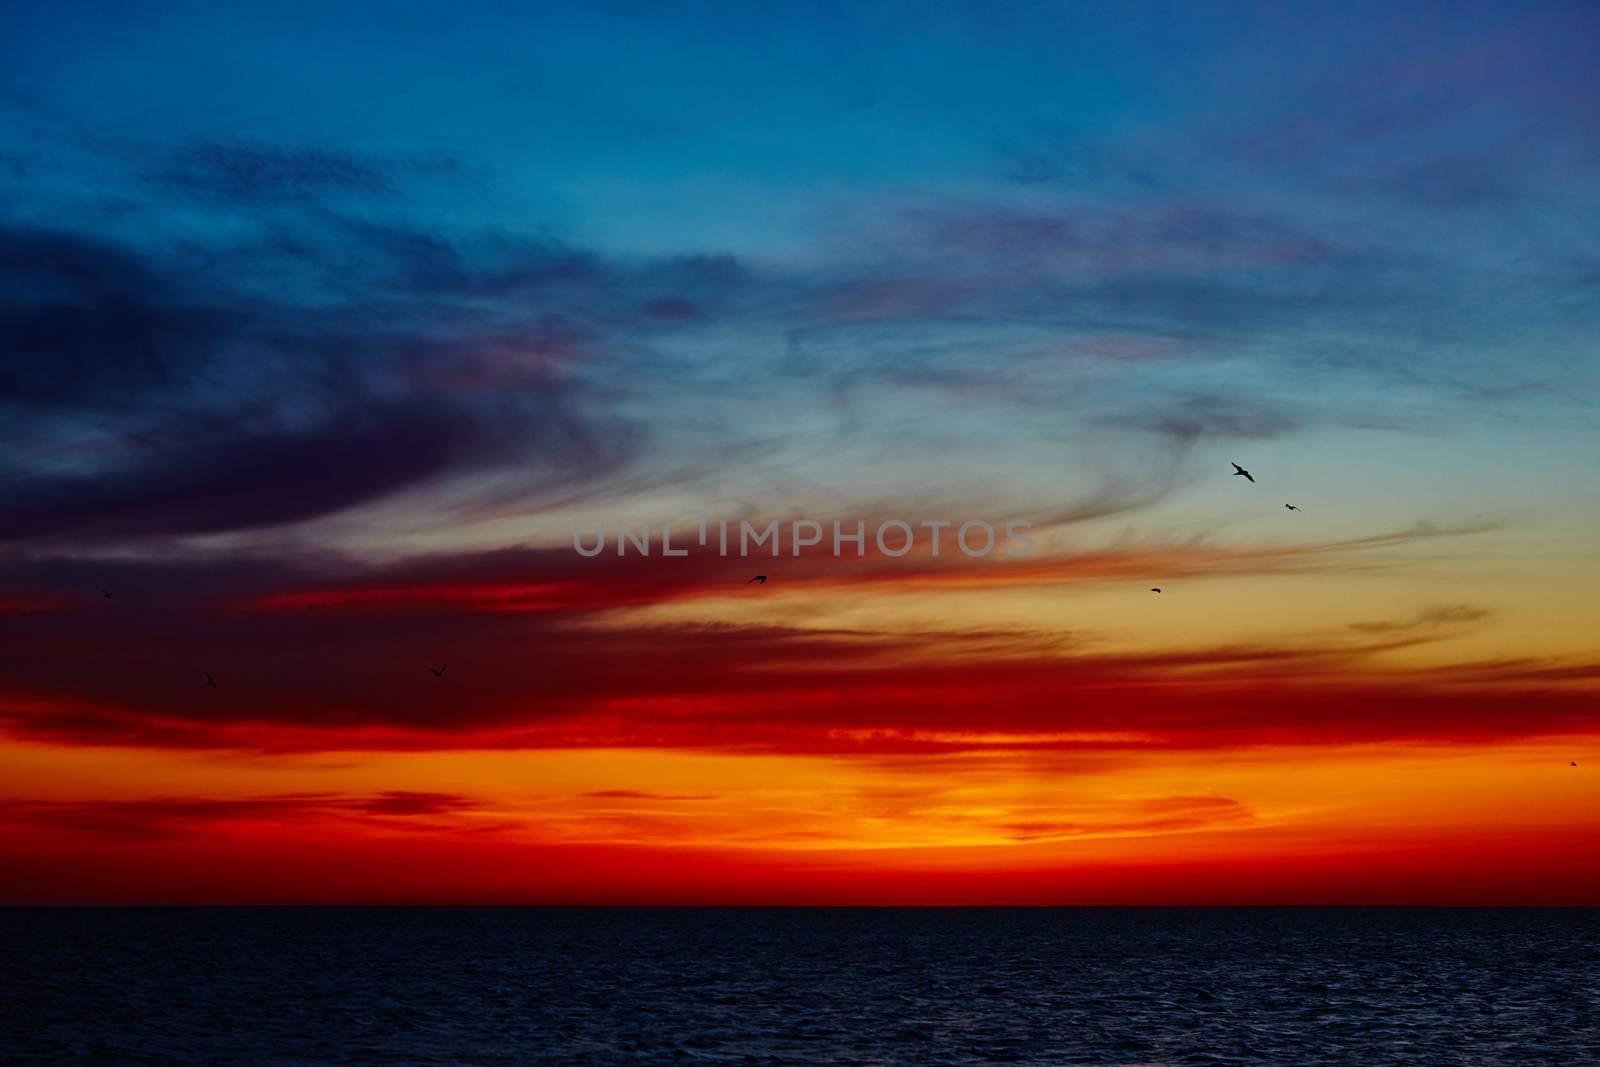 Sunset over the ocean by sarymsakov